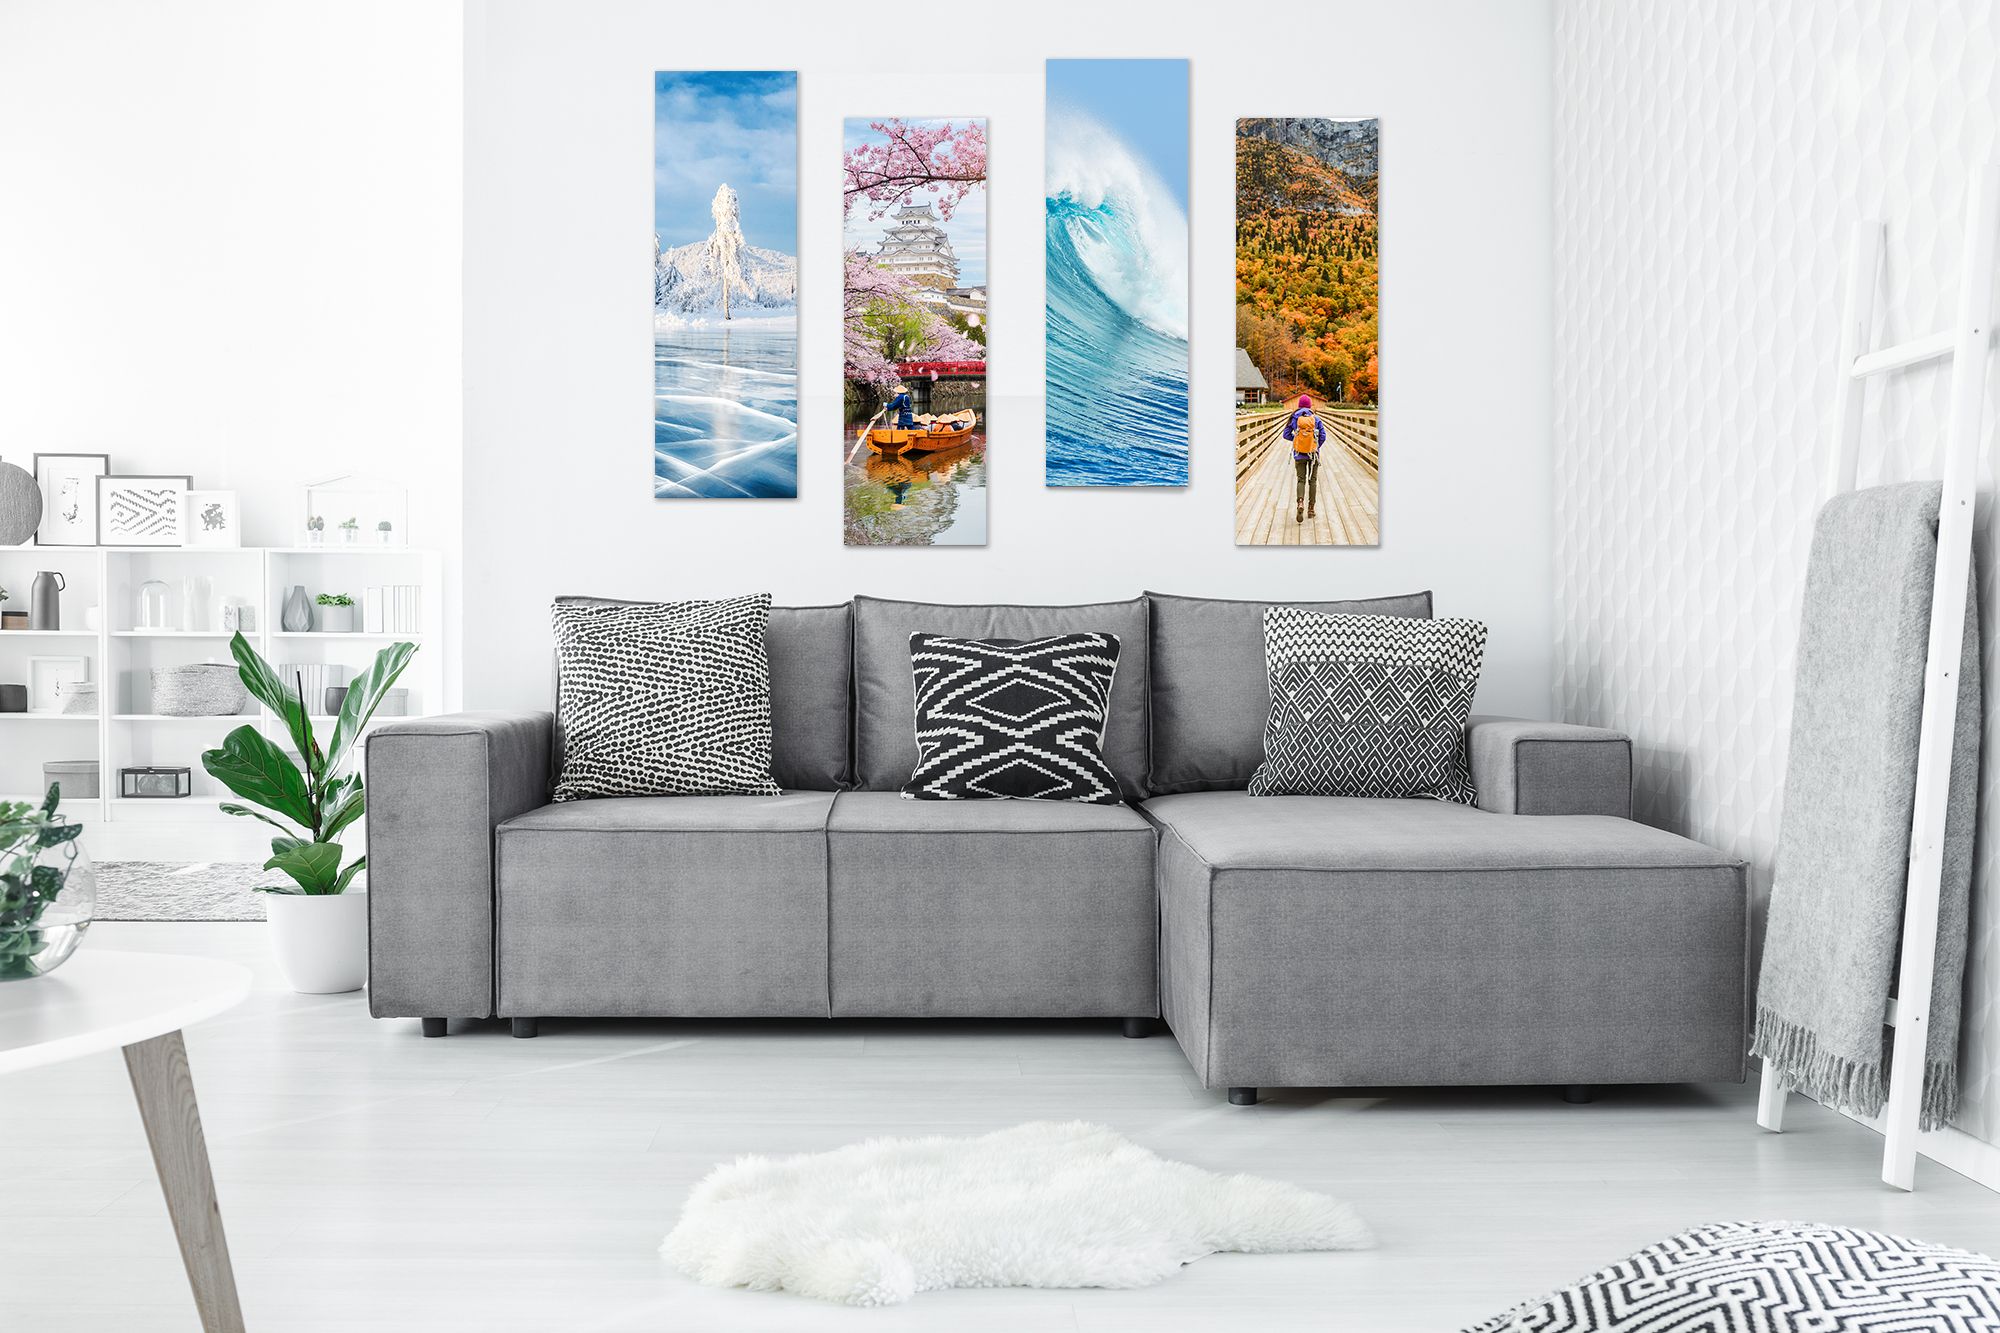 Print seasons as a creative way to display photos on your wall